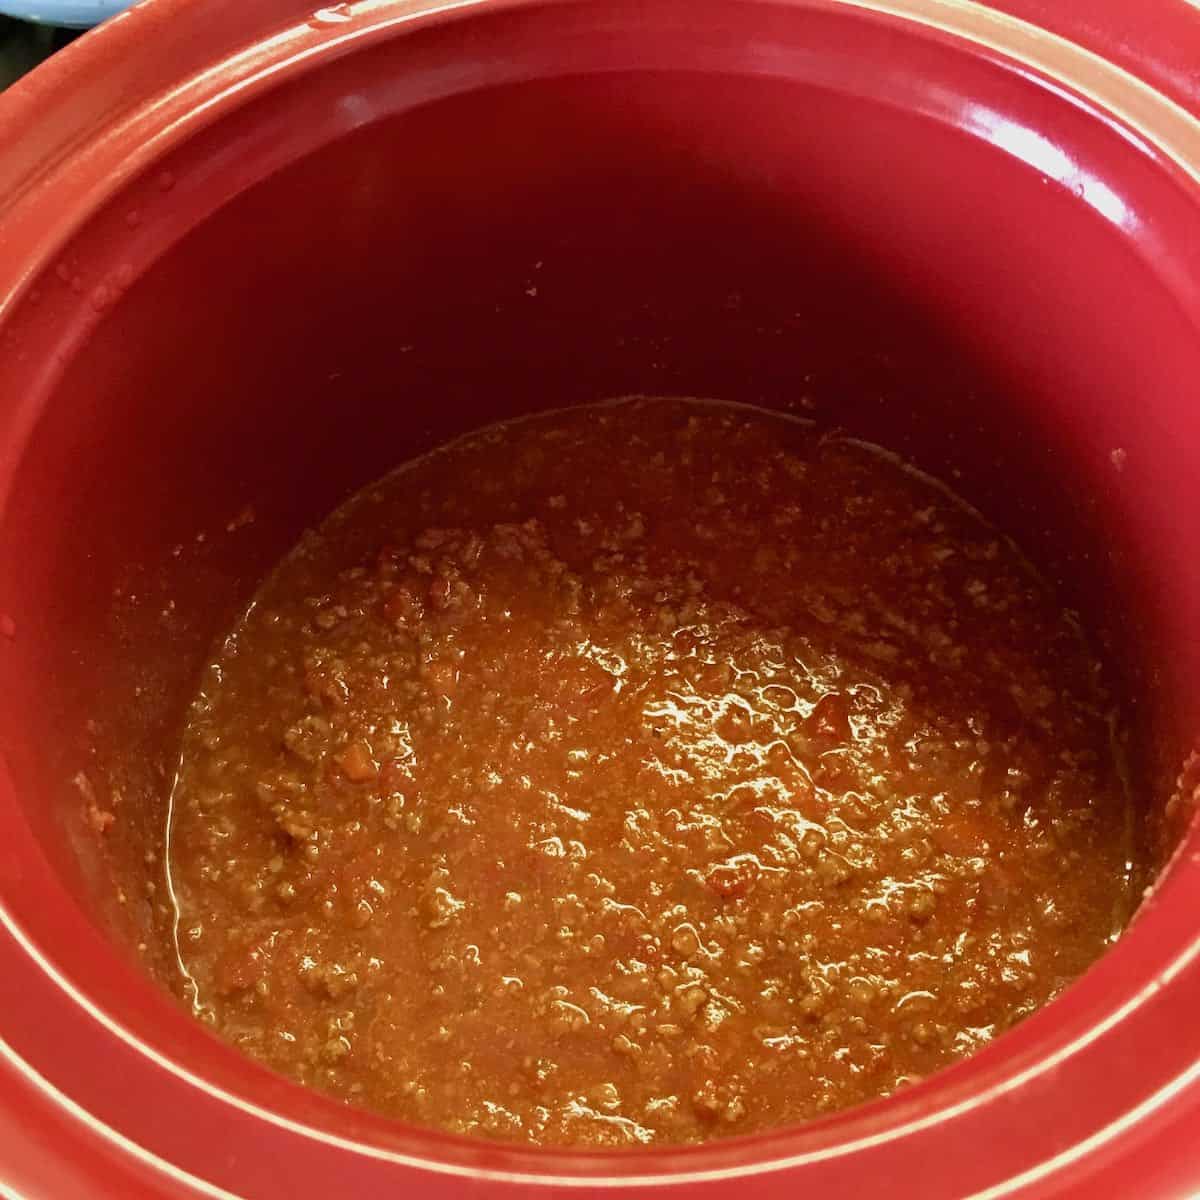 Tomato sauce.